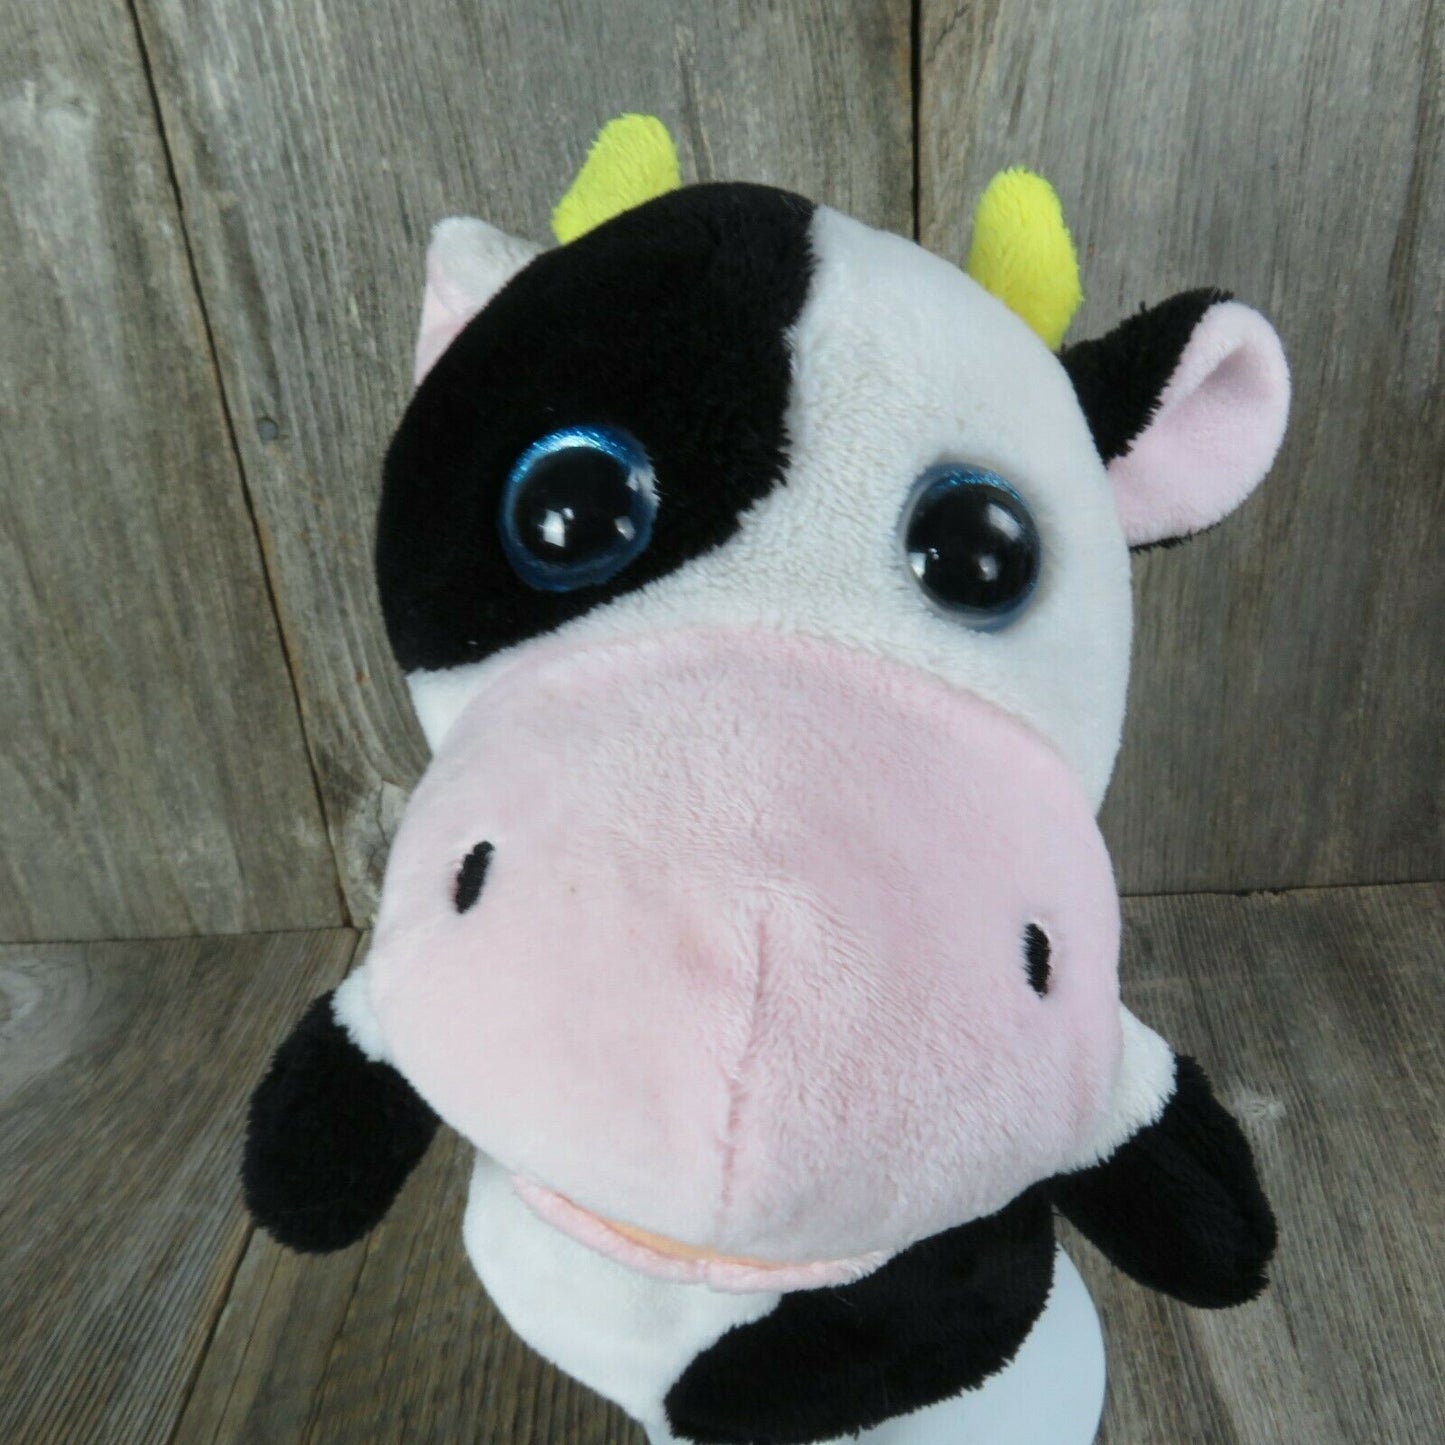 Cow Hand Puppet Black and White Plush KellyToy Stuffed Animal